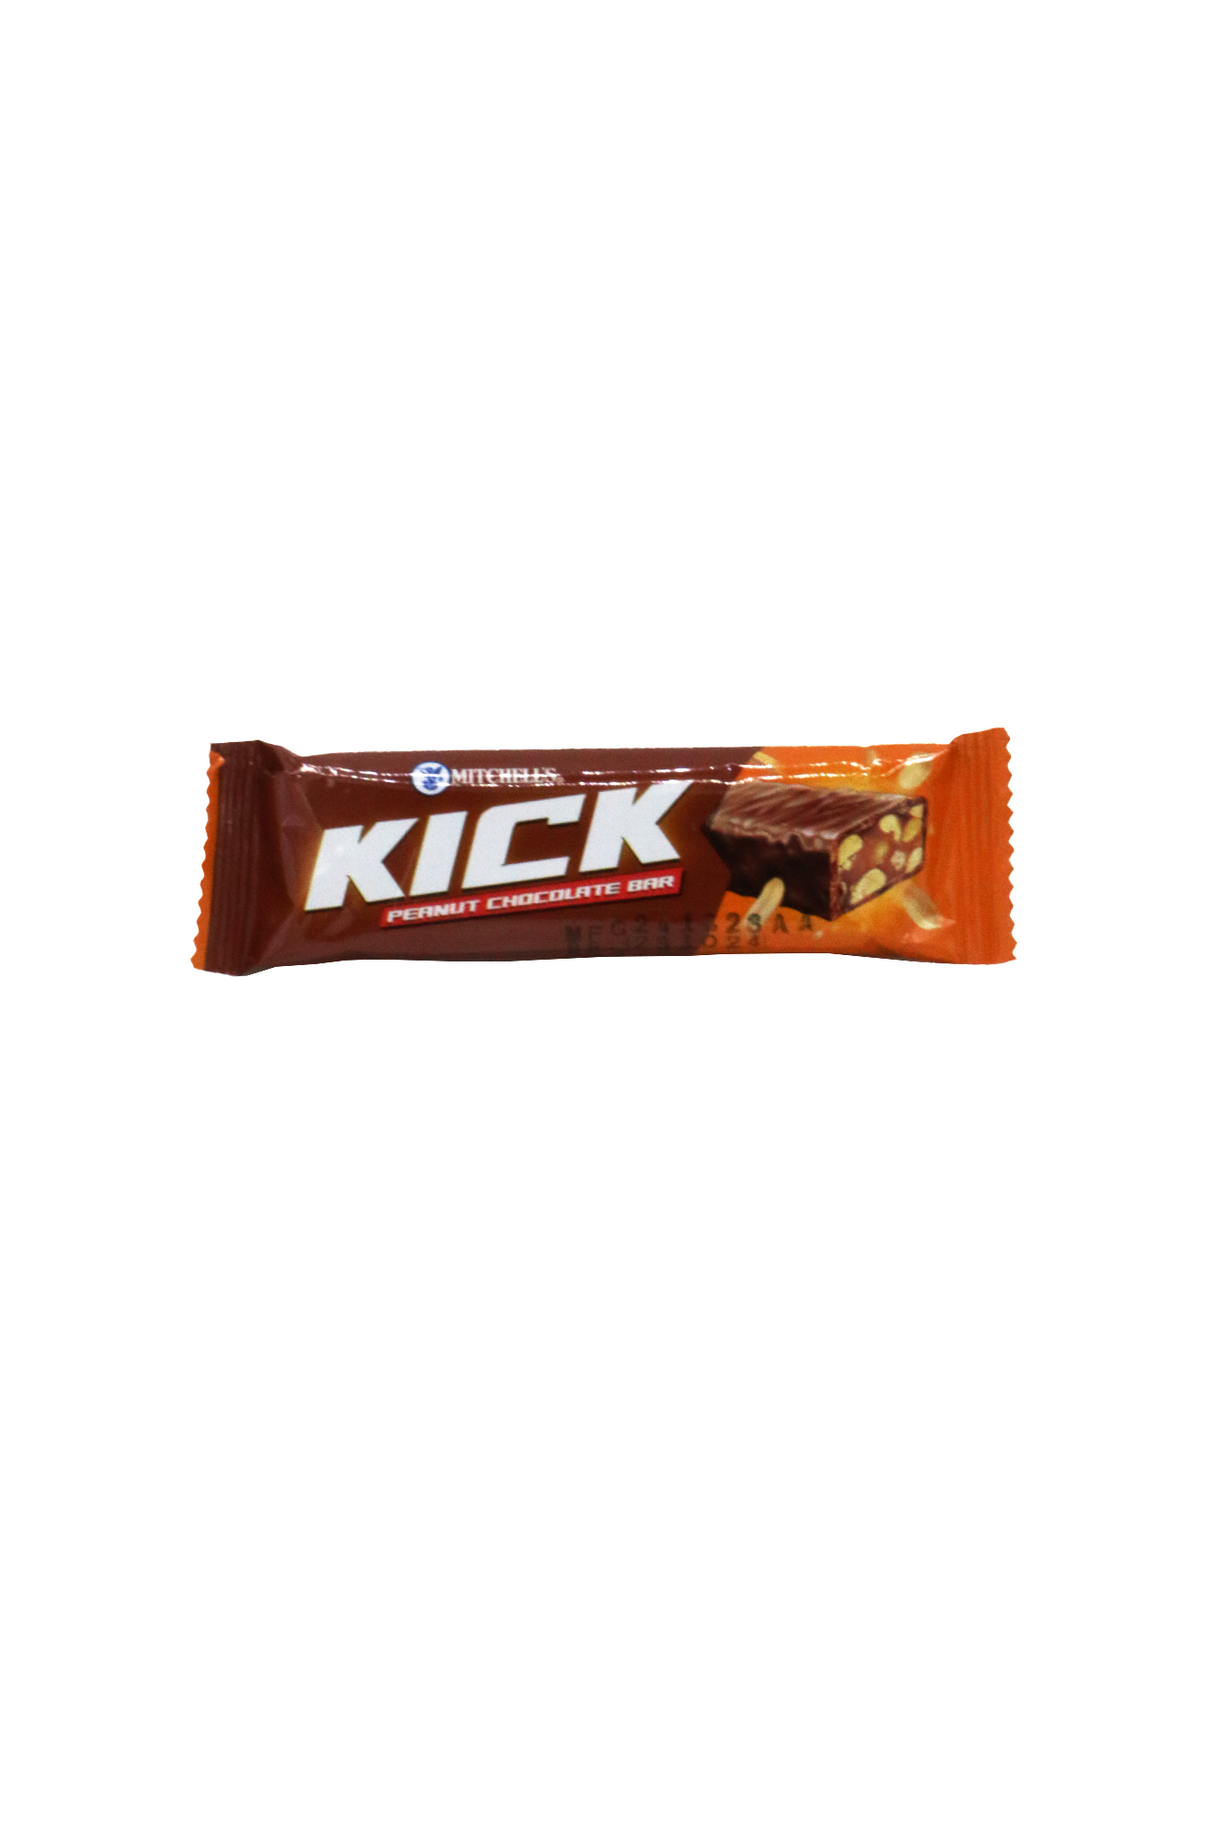 mitchells chocolate peanut bar kick 34g